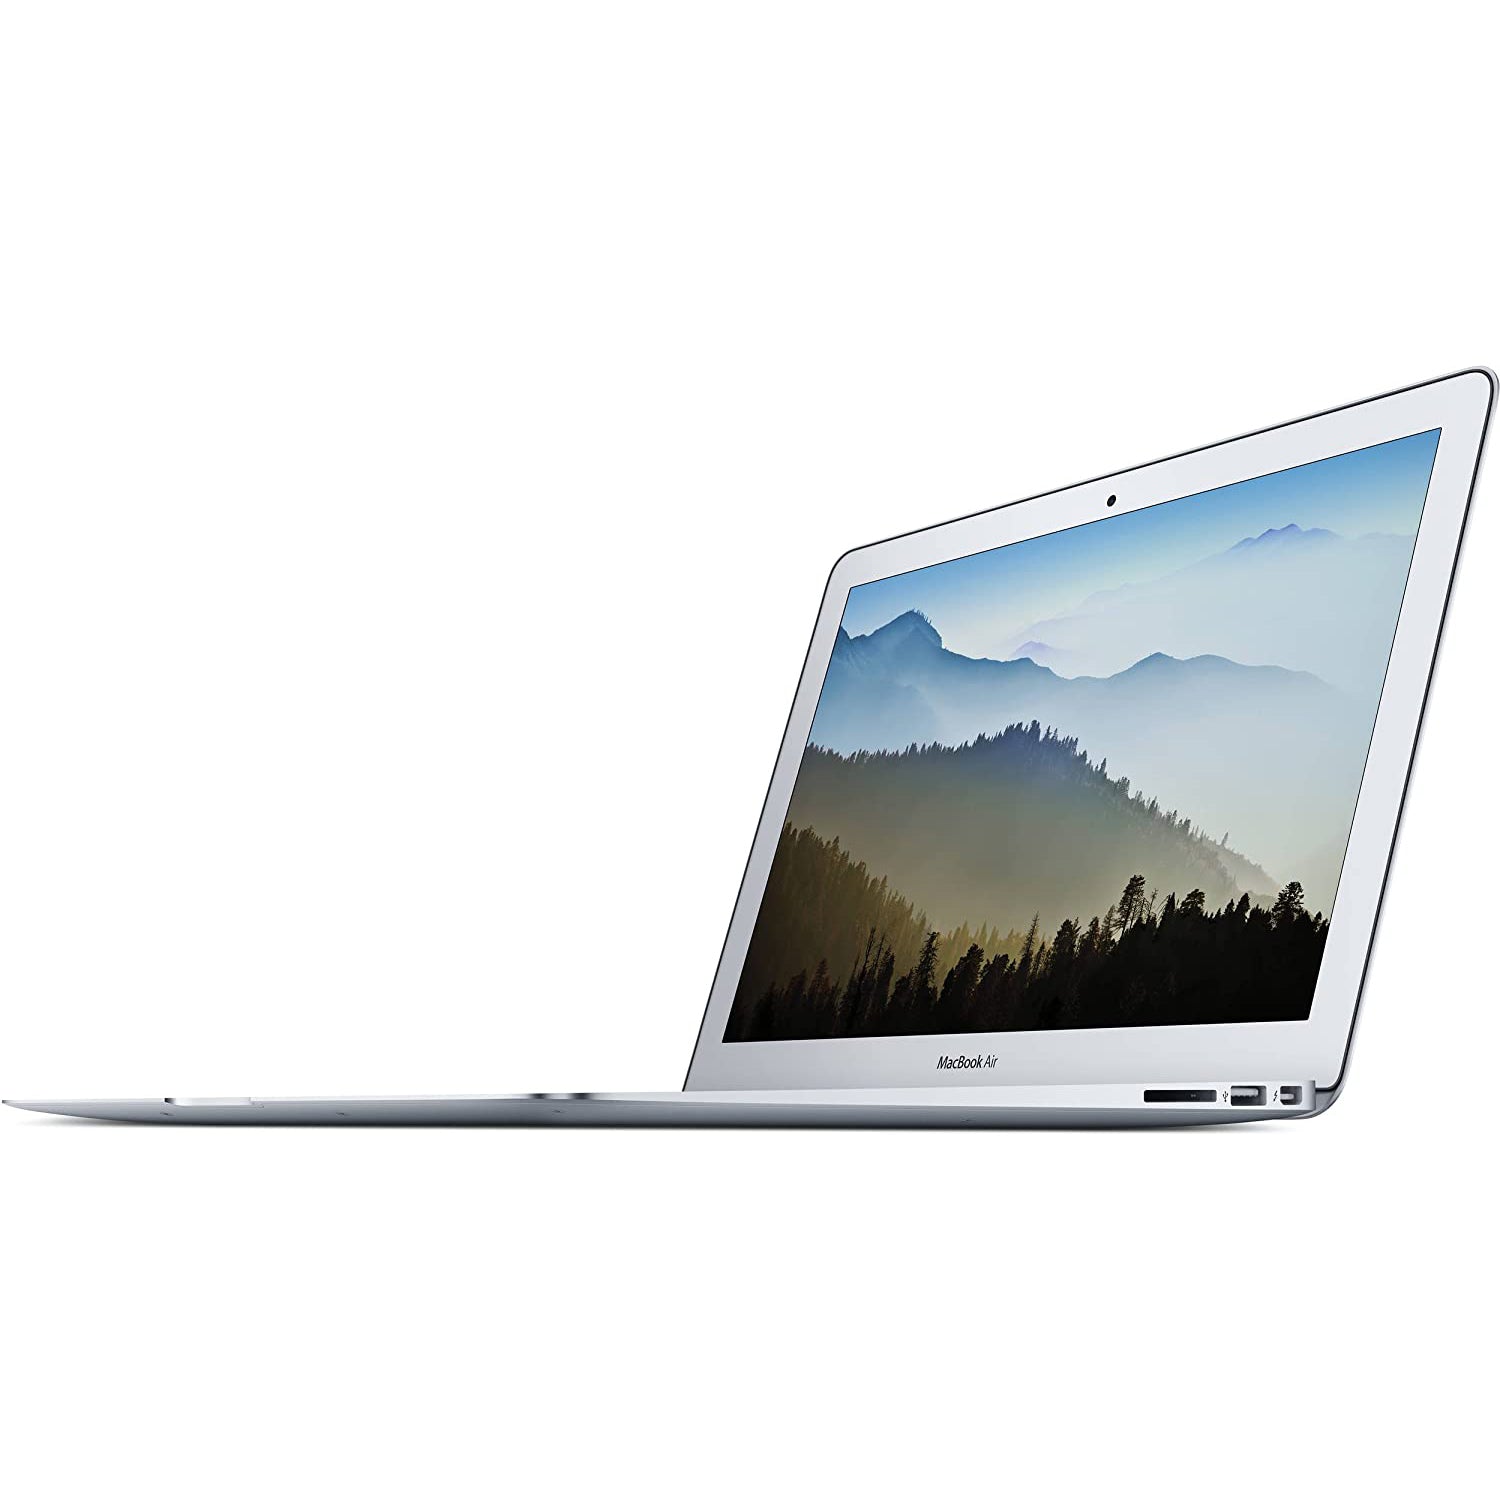 Apple MacBook Air 13.3 i5 1.6GHz 4GB 128GB MQD32LL/A (Refurbished)